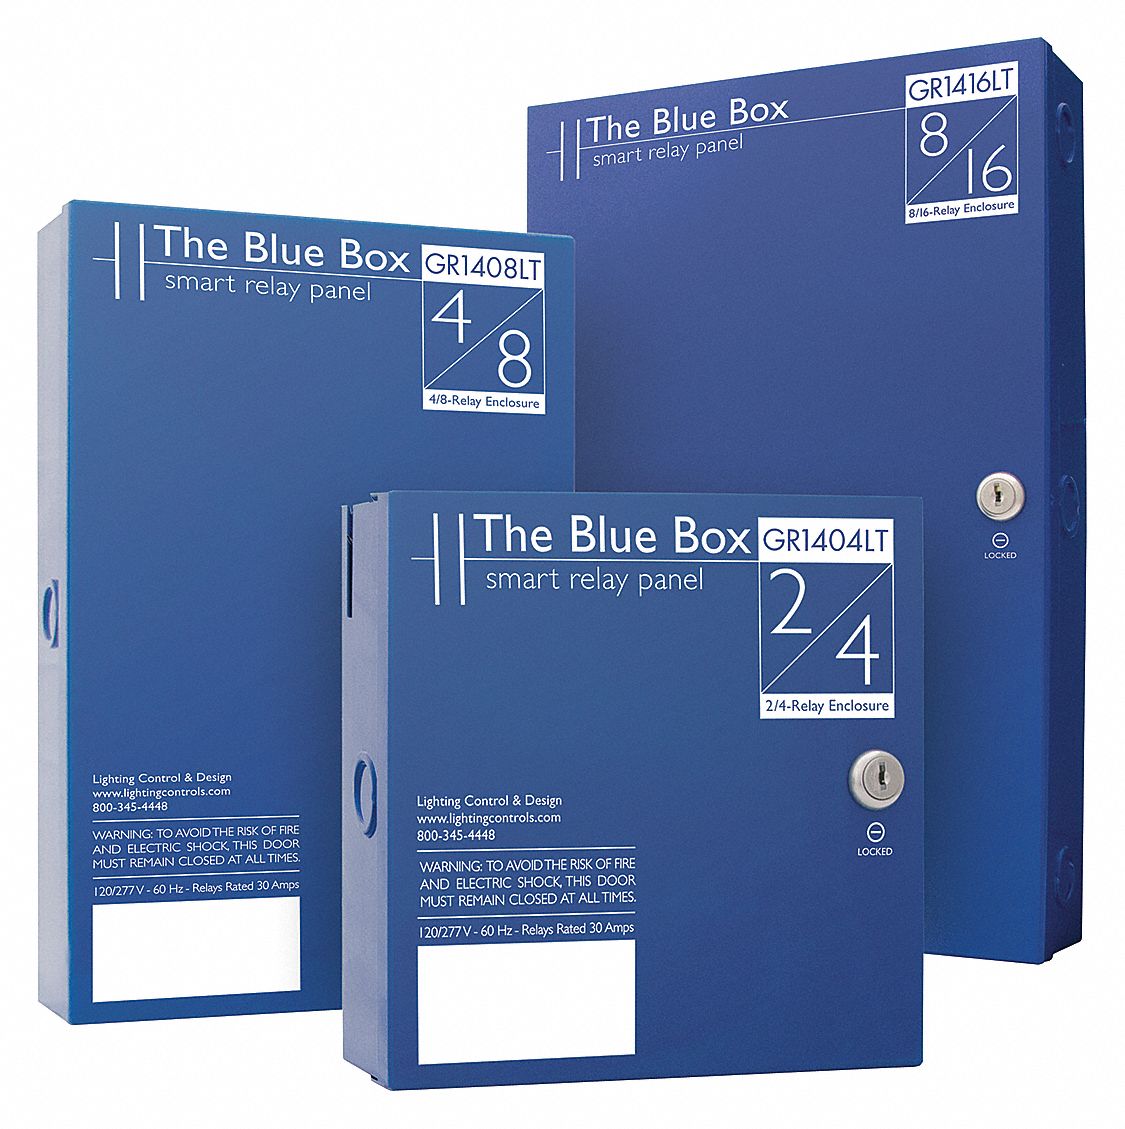 20VE66 - Control Panel Wall Box Blue